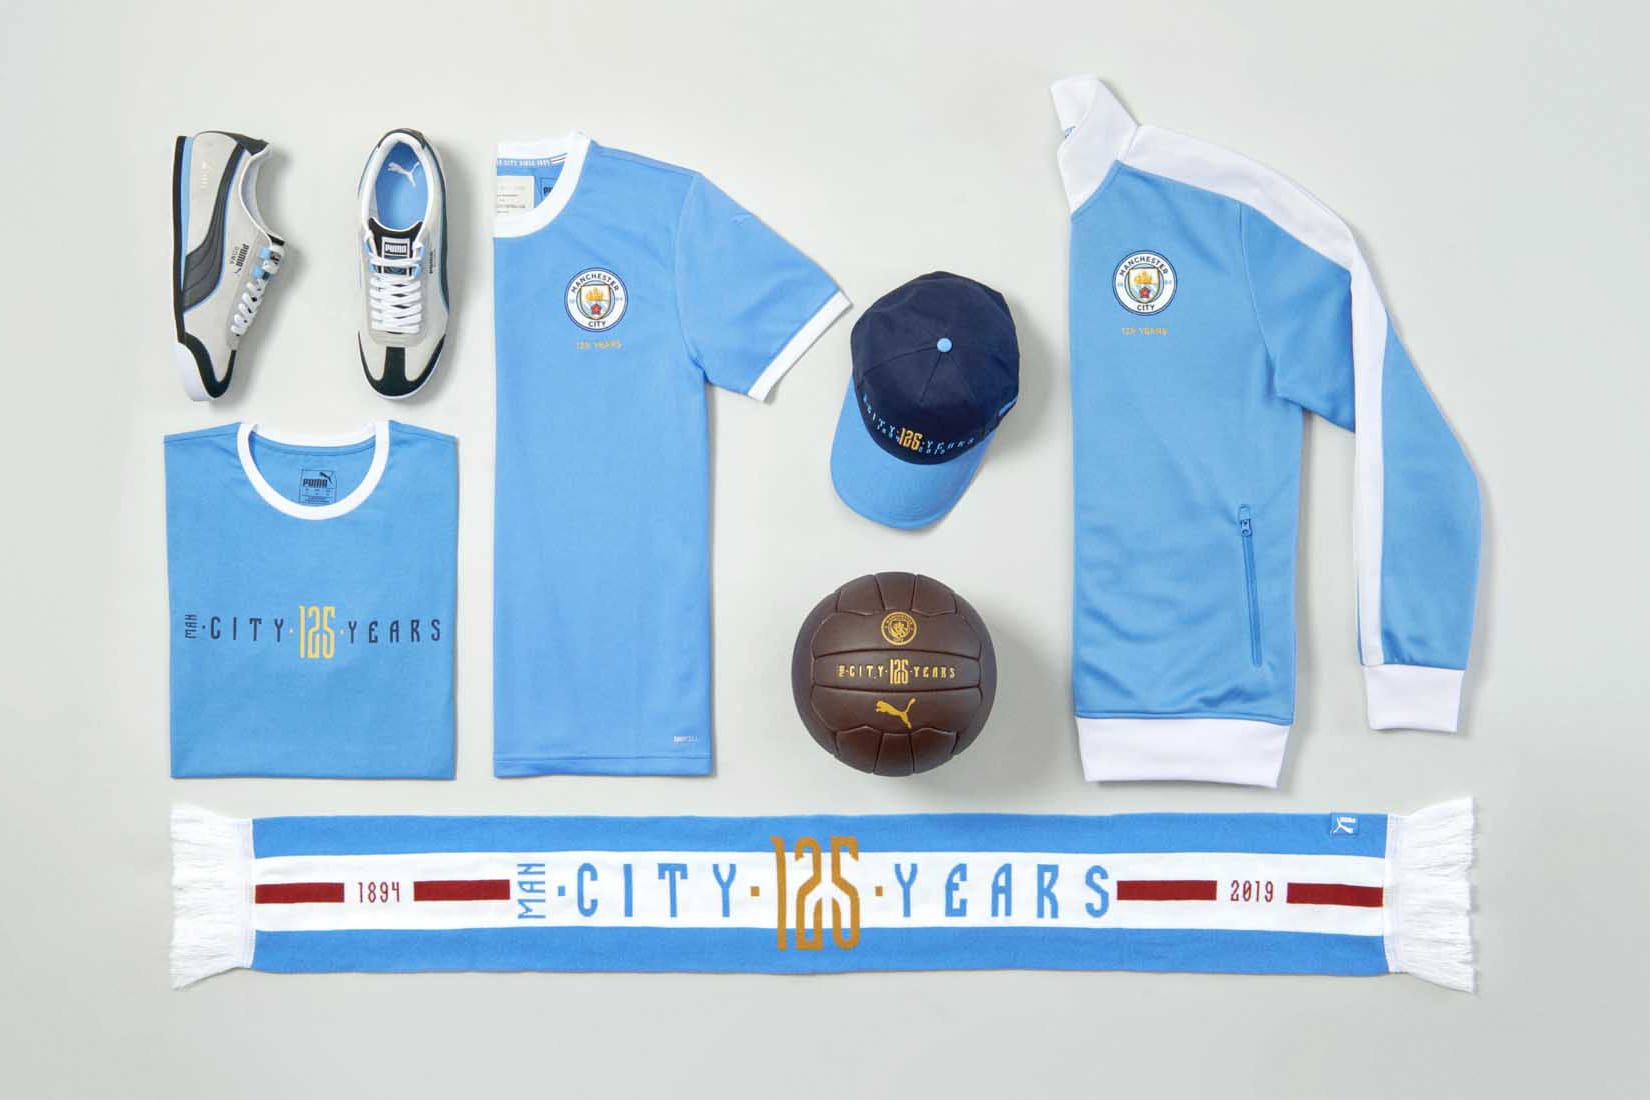 Manchester City 125th Anniversary 